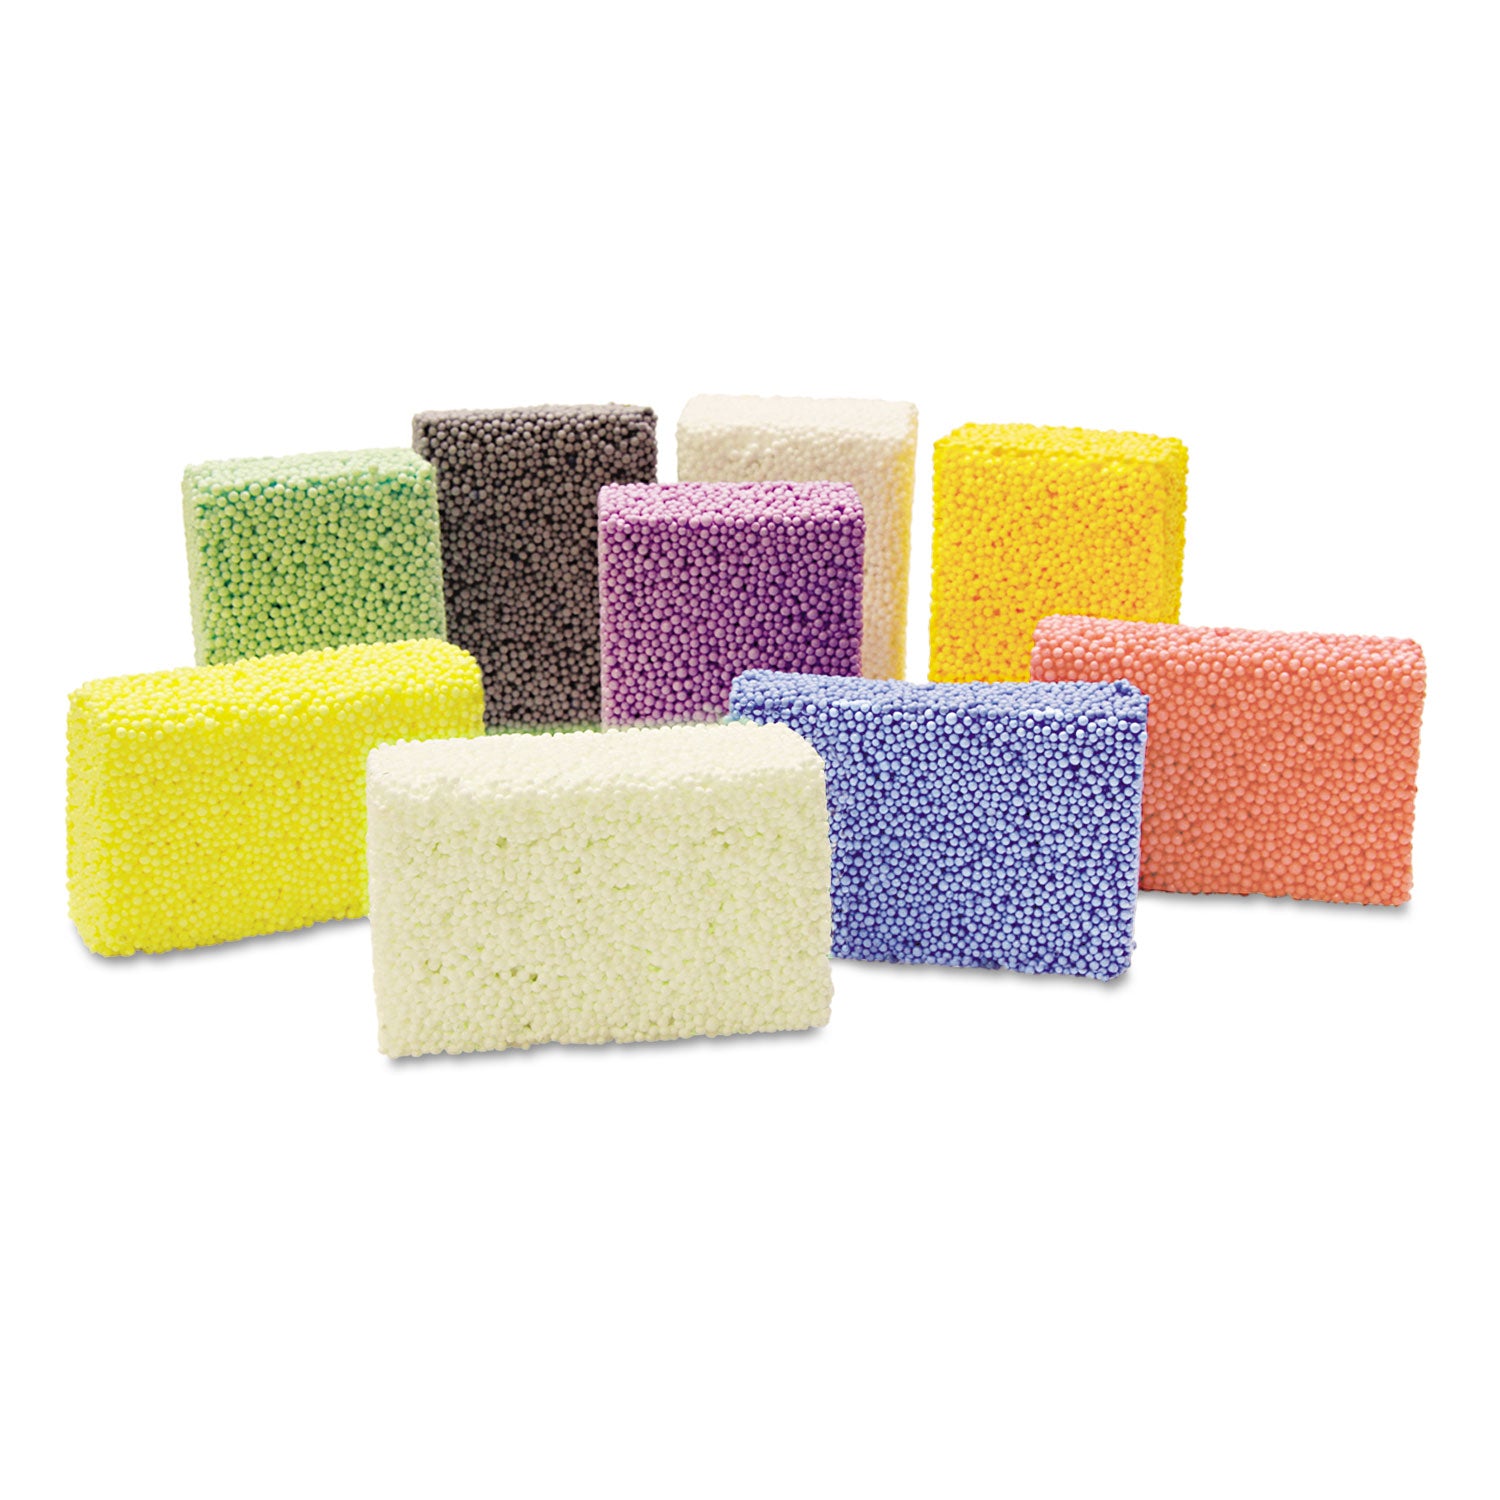 Squishy Foam Classpack, 9 Assorted Colors, 36 Blocks - 